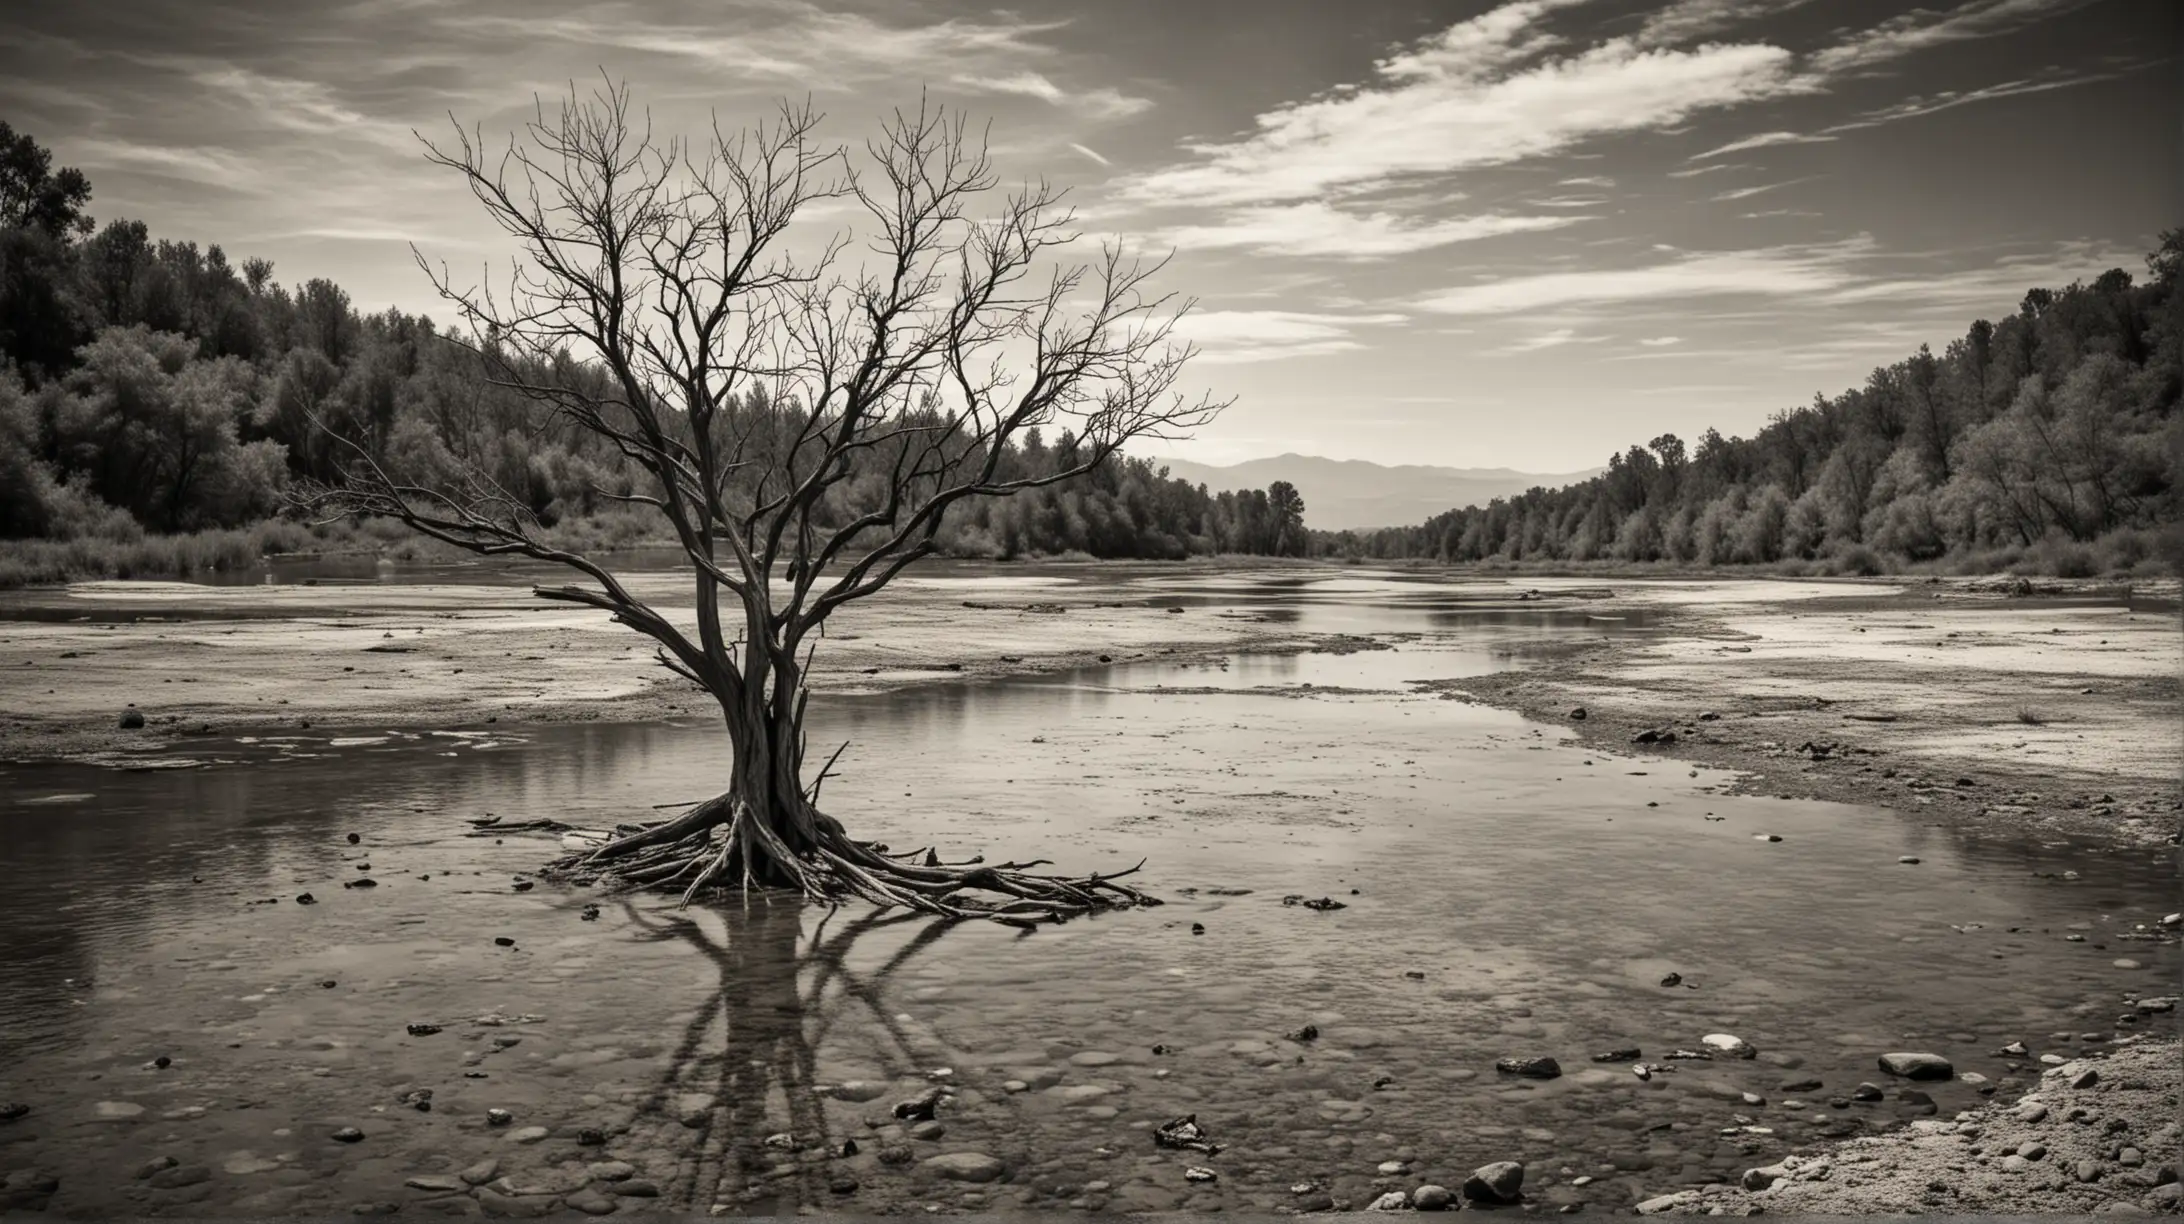 dry tree in lanscape bw grunge lake river

